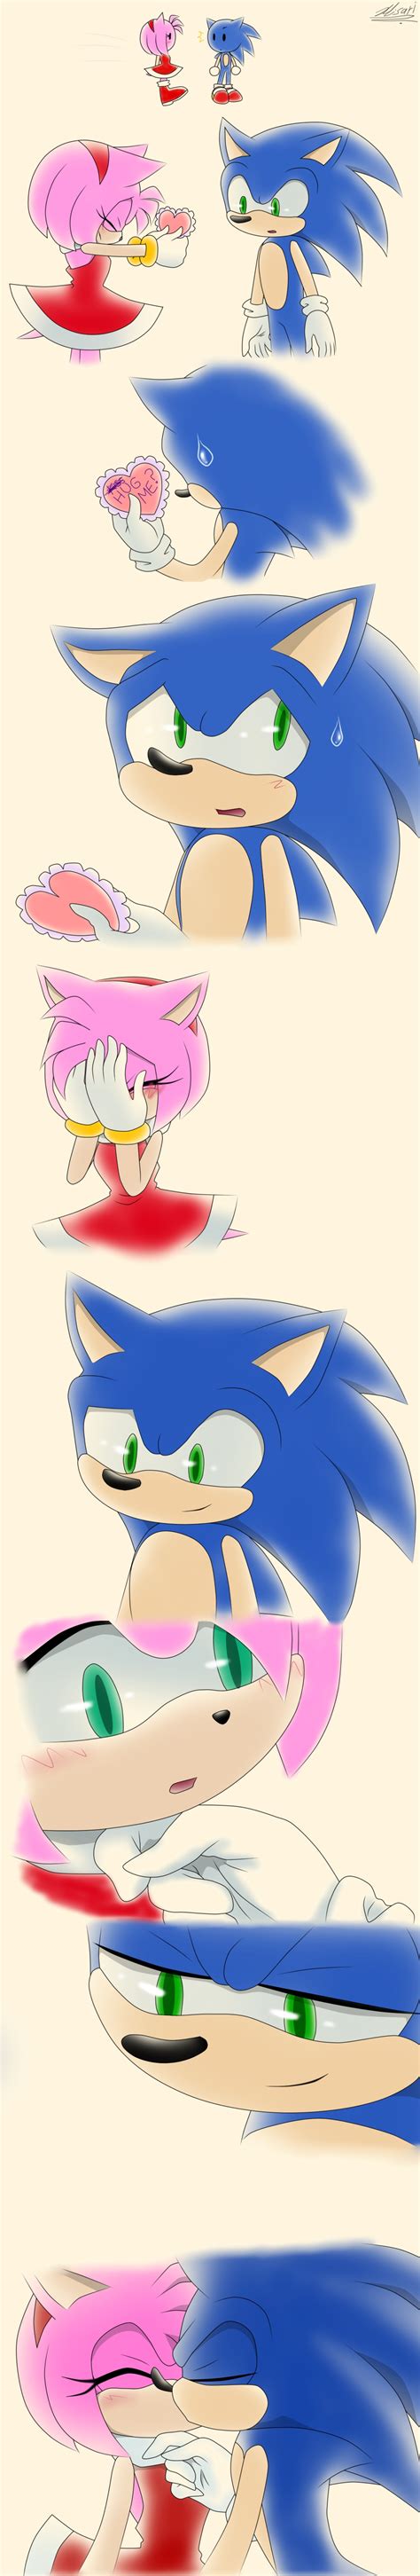 Sonic The Hedgehog Image By Misari Zerochan Anime Image Board